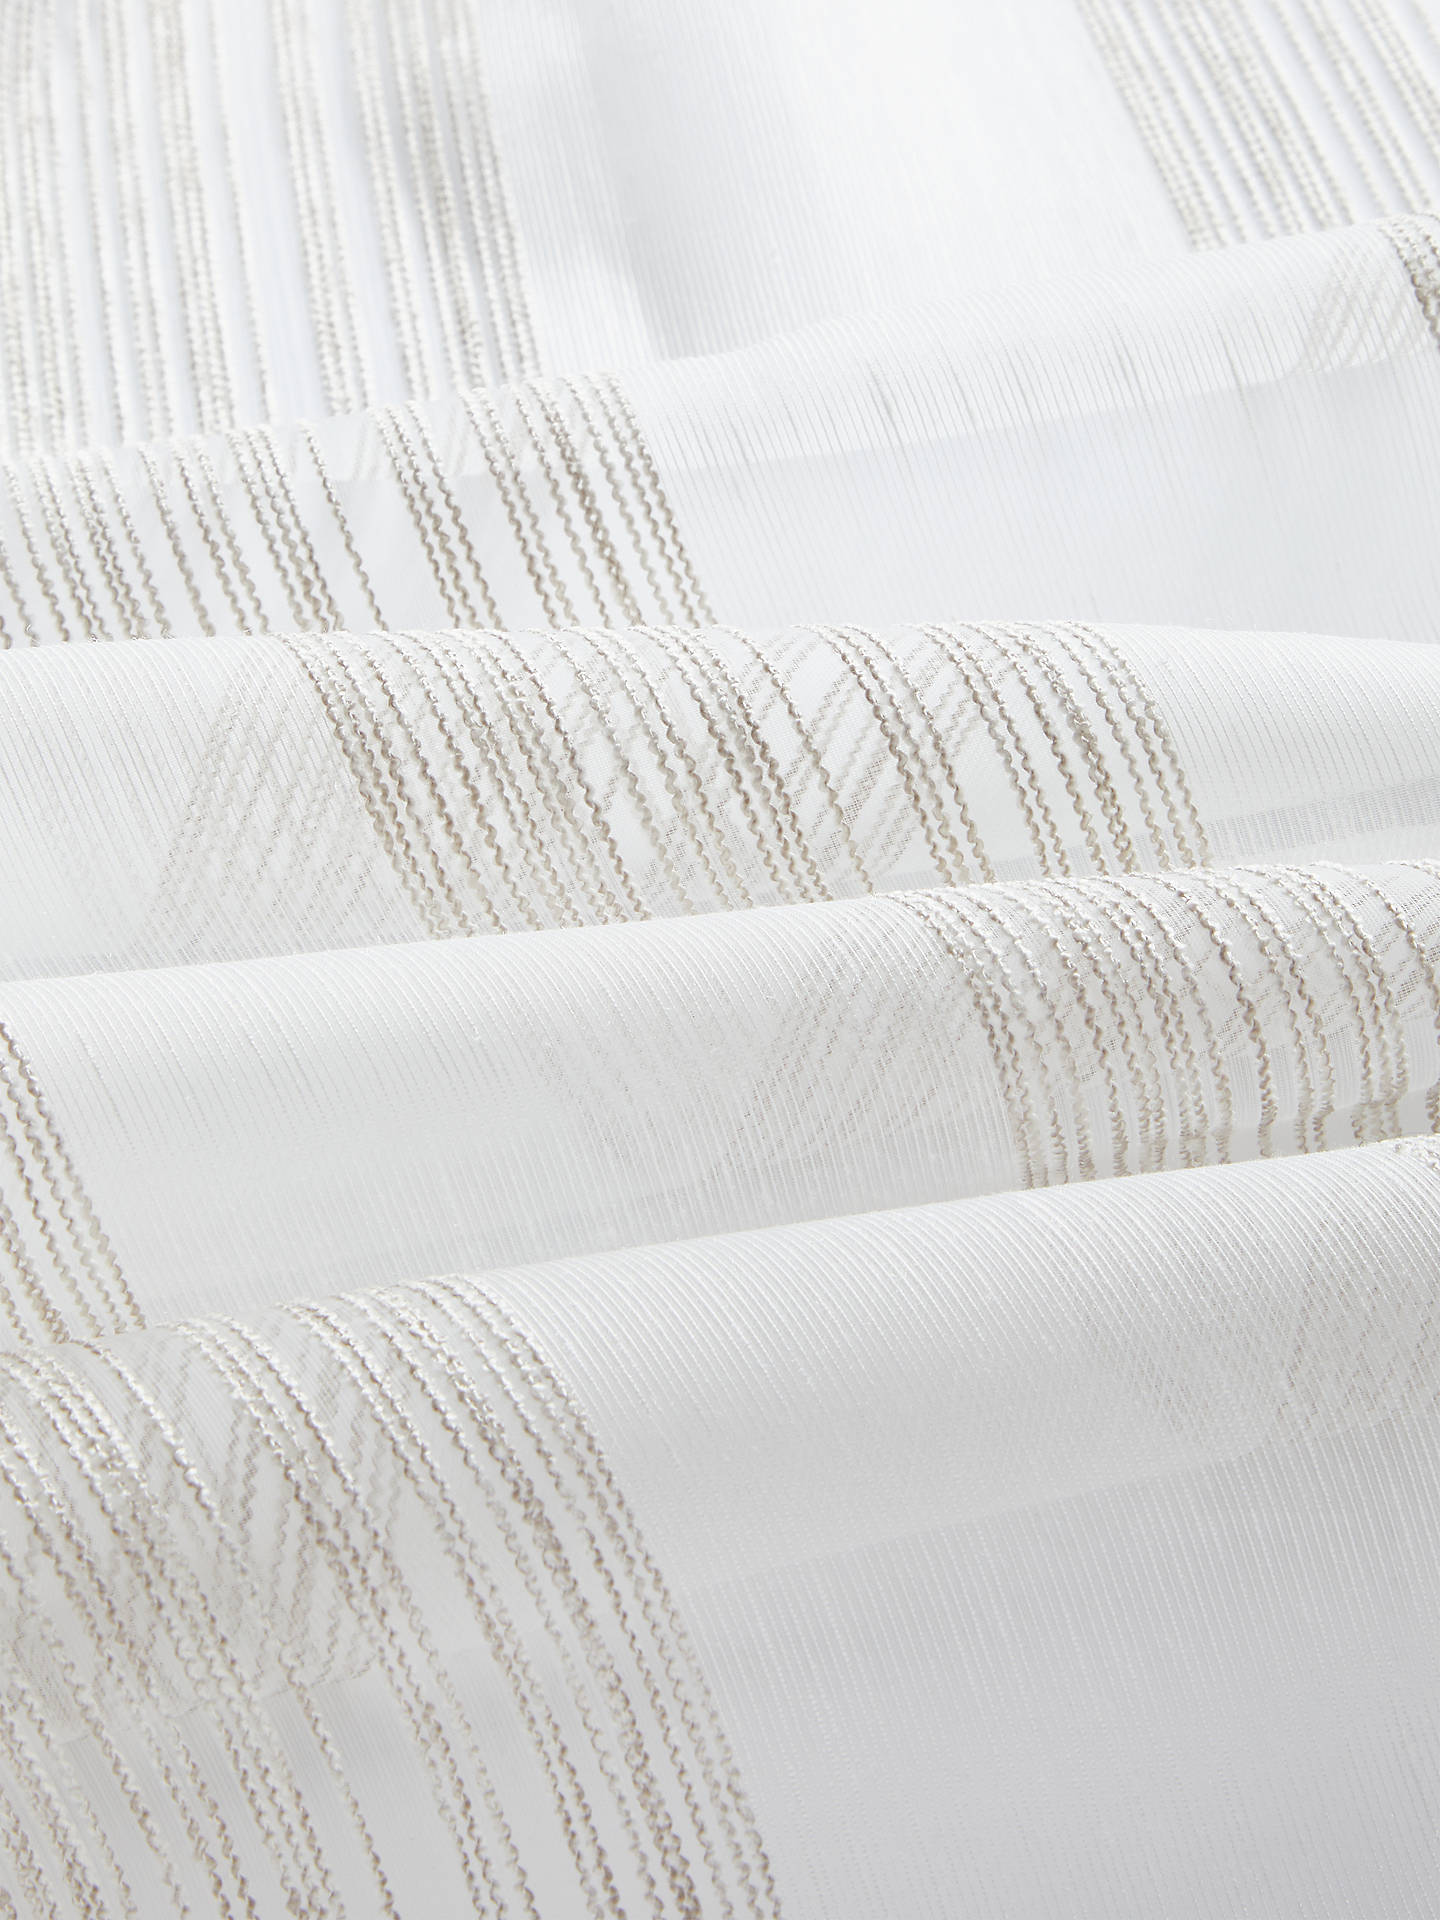 John Lewis & Partners Fine Stripe Voile Fabric, Natural at John Lewis ...